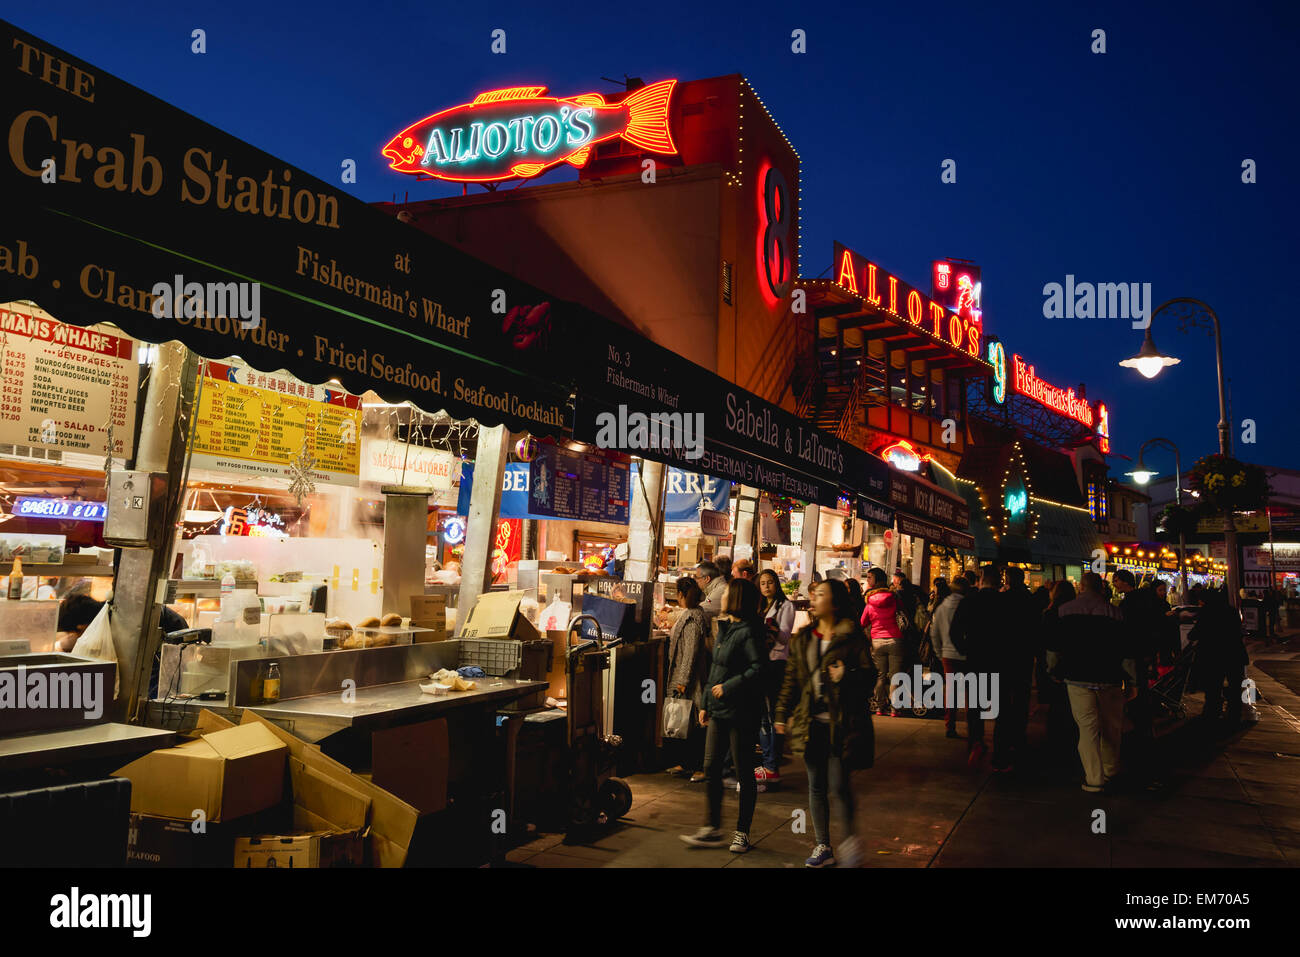 Food stalls along Taylor Street at nighttime, Fisherman's Wharf; San